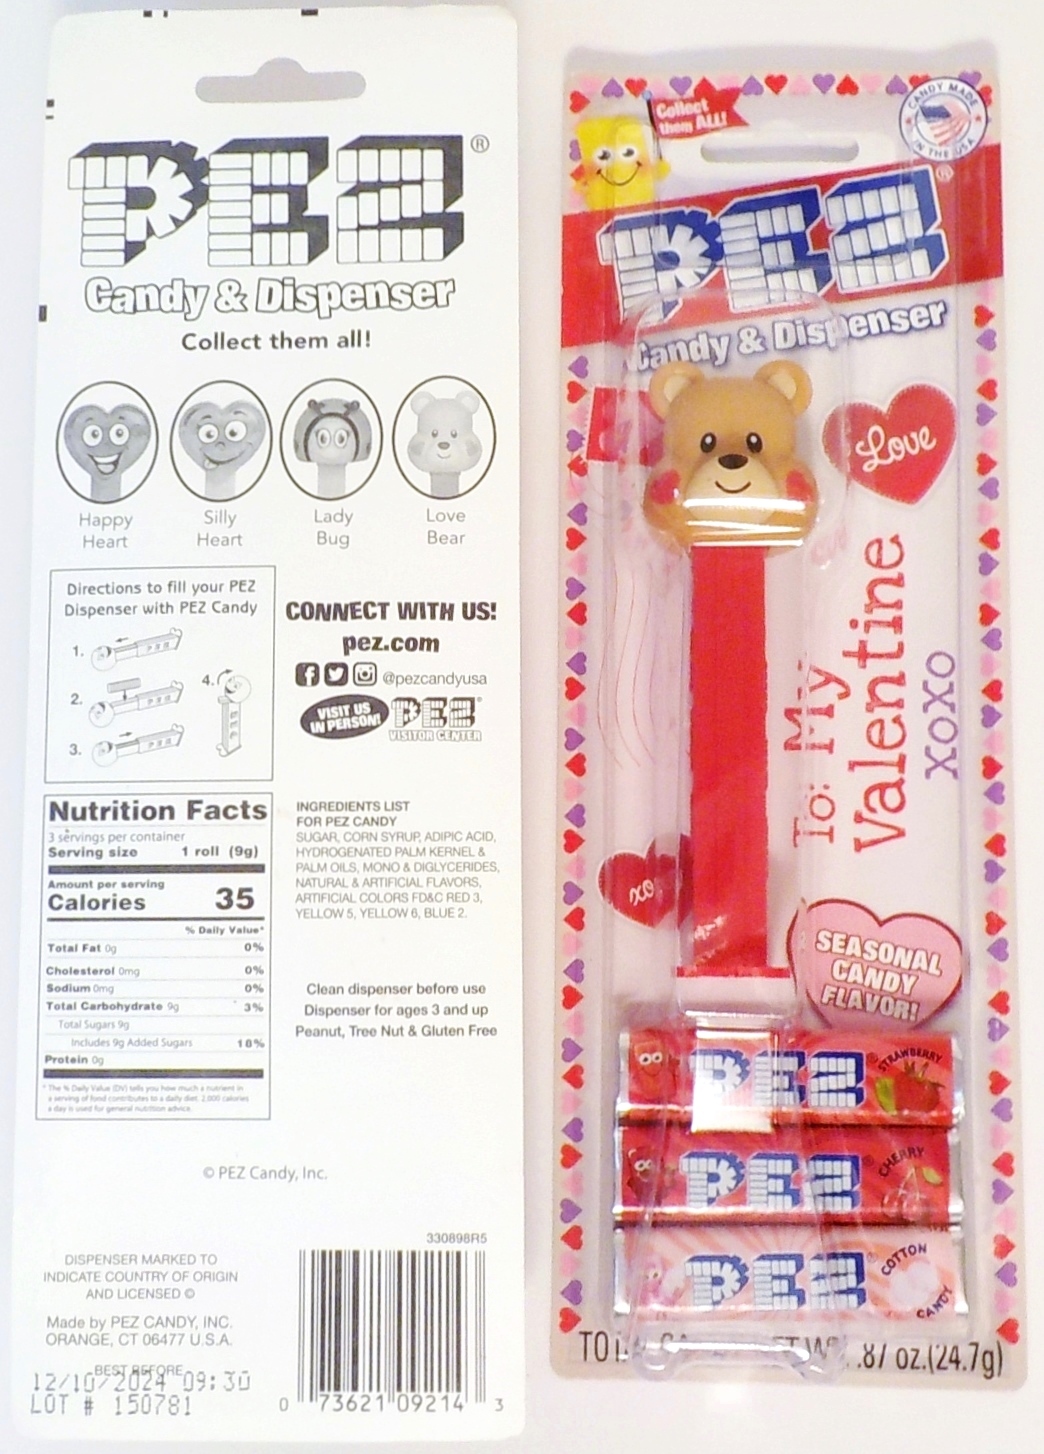 PEZ Valentine's Love Bear Dispenser 2020 Valentine's Day Collection tall card